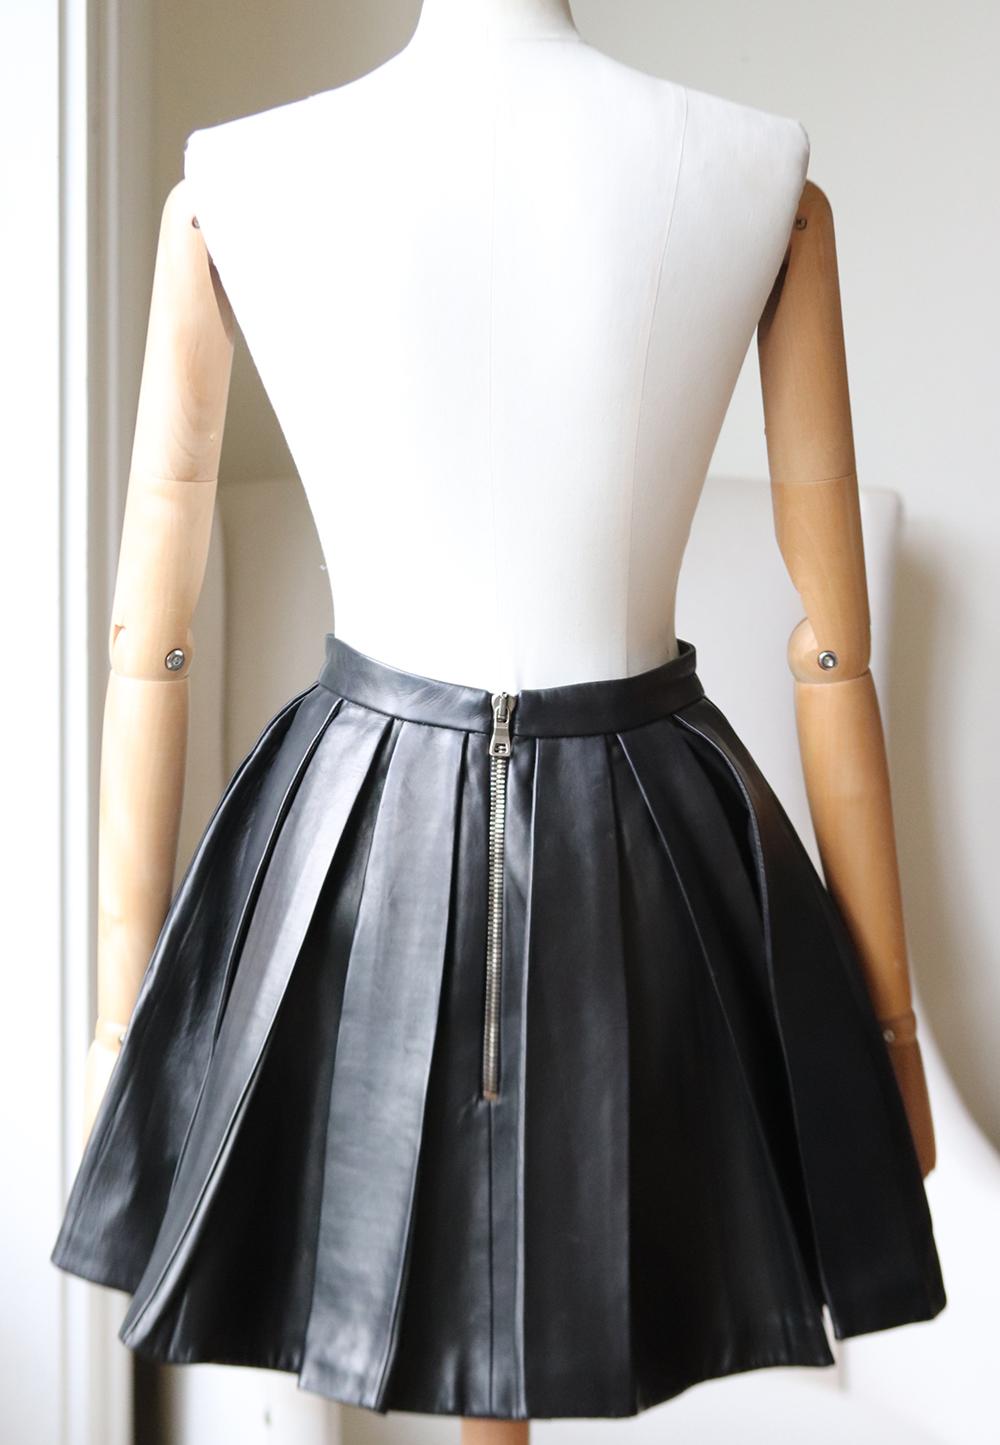 balmain leather skirt